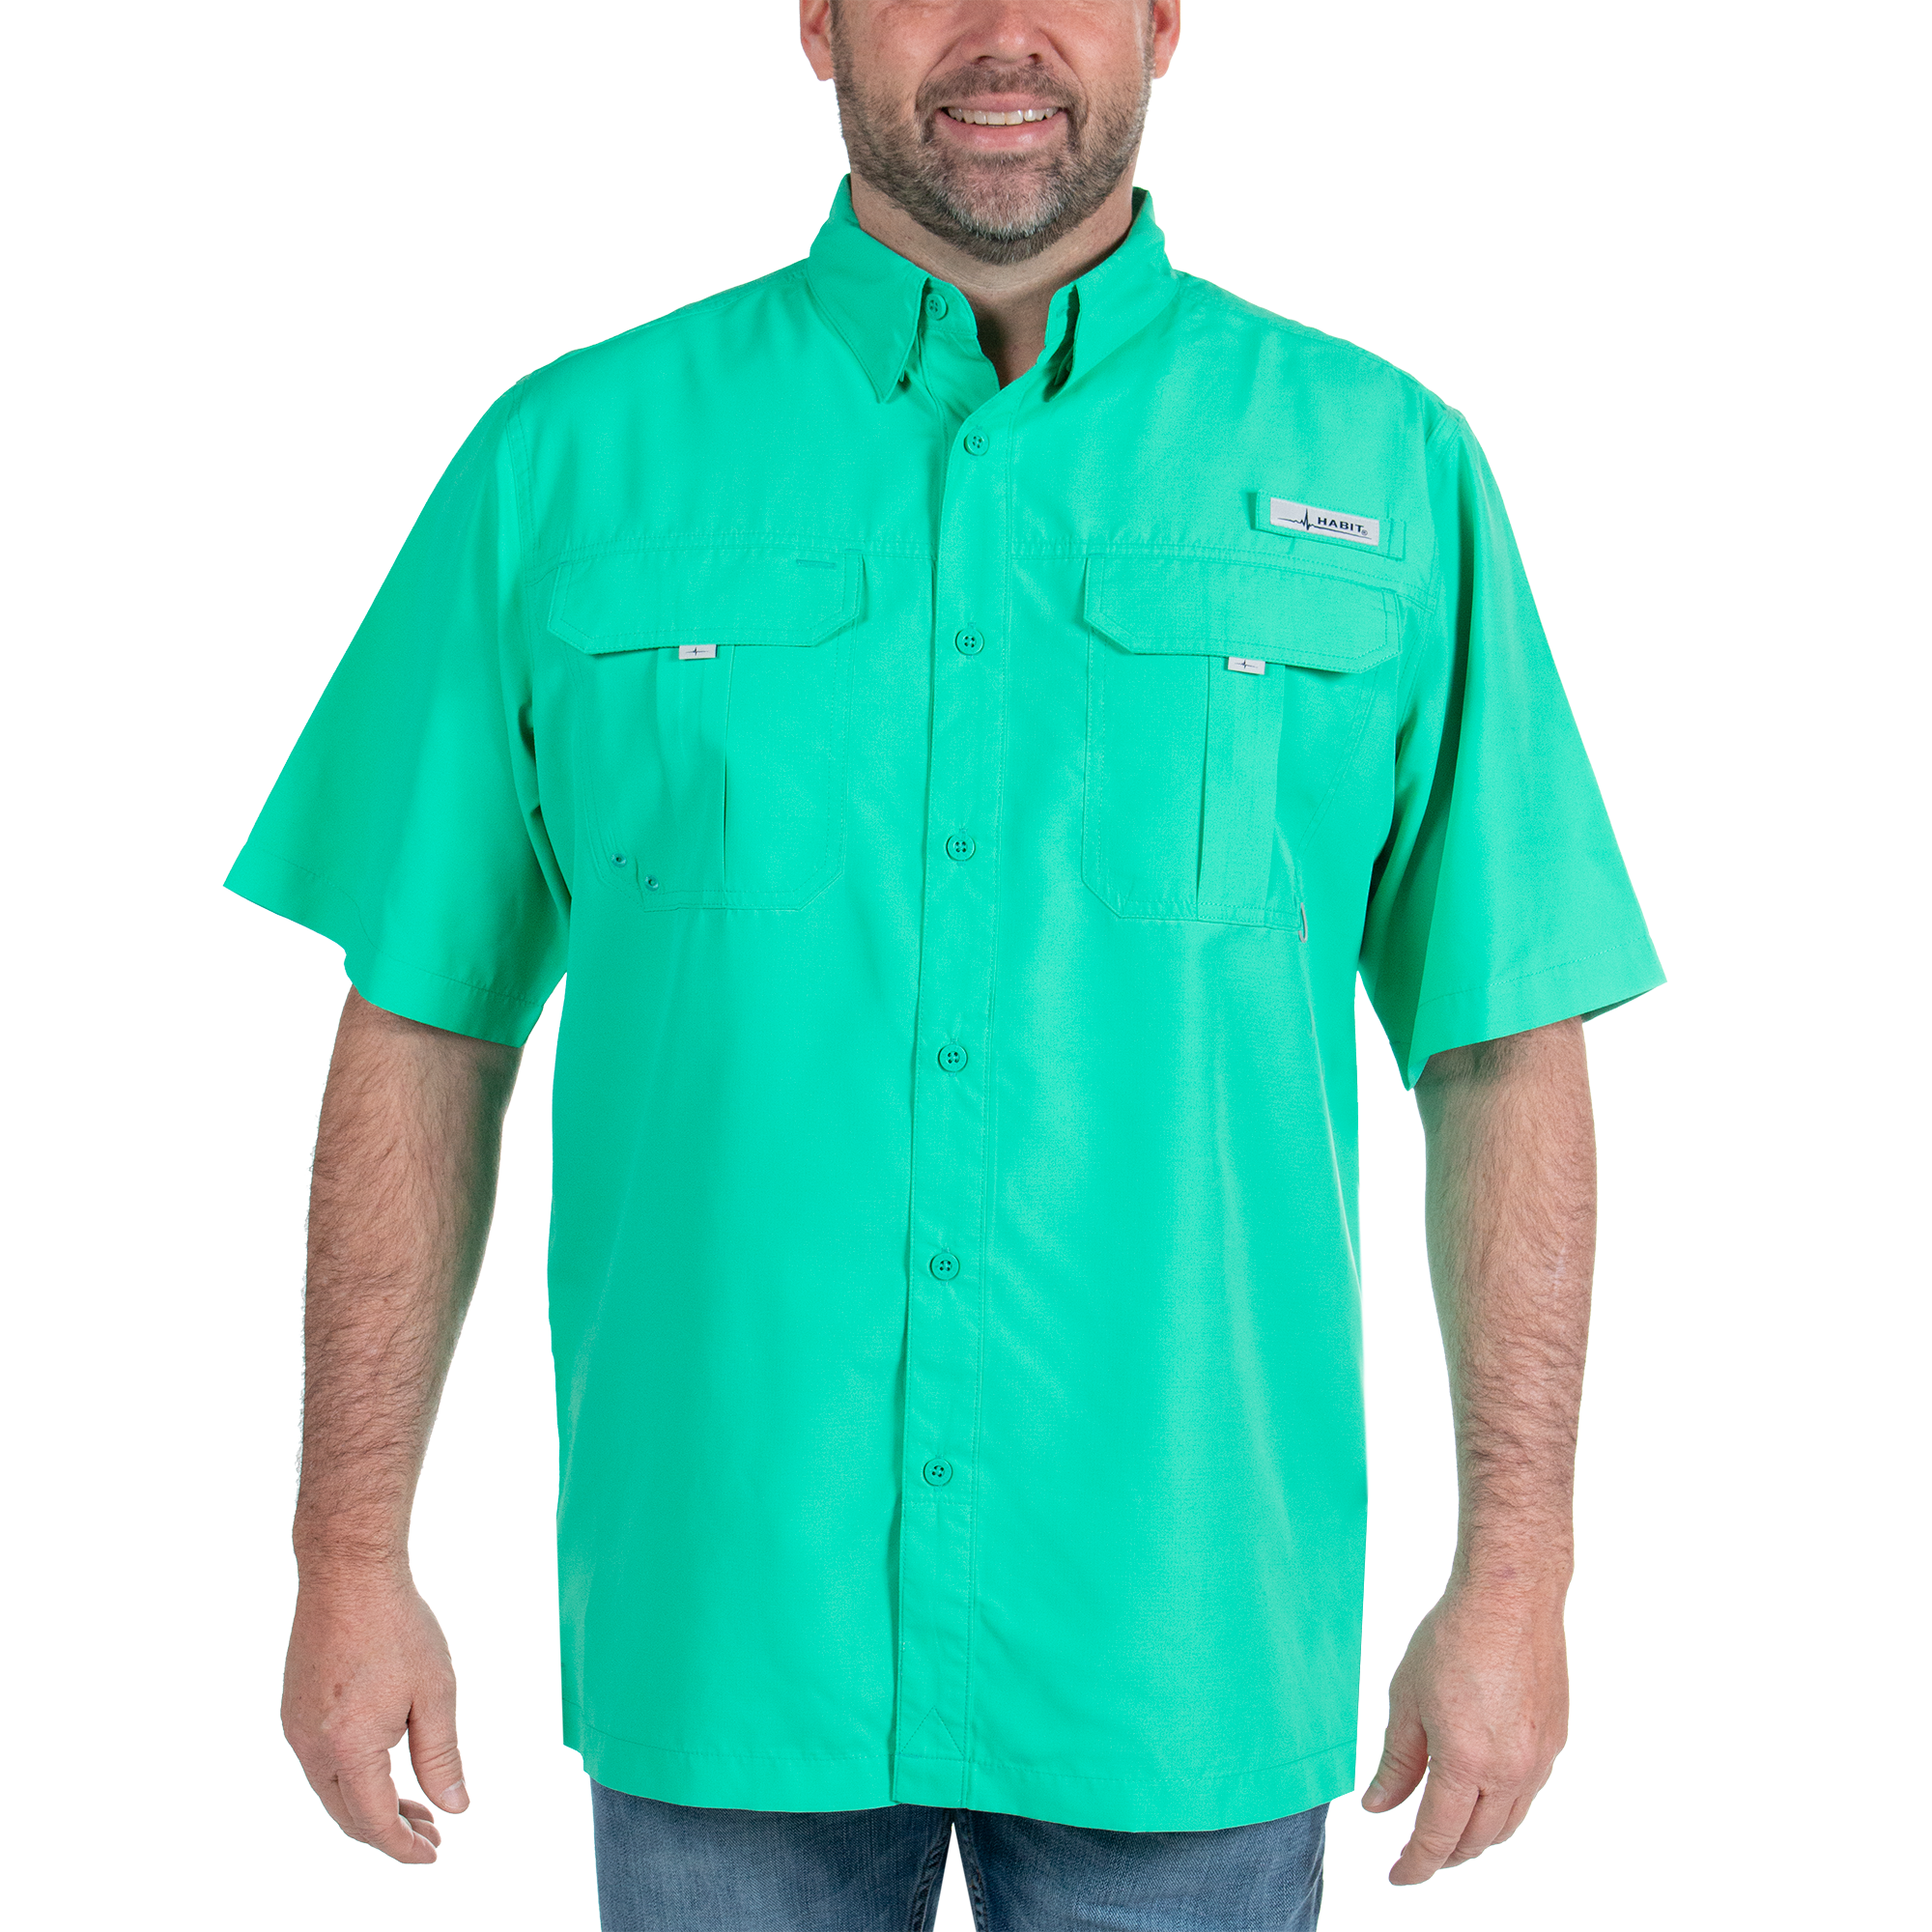 HABIT fishing shirt 40+ Solar factor, forest green. Men's size